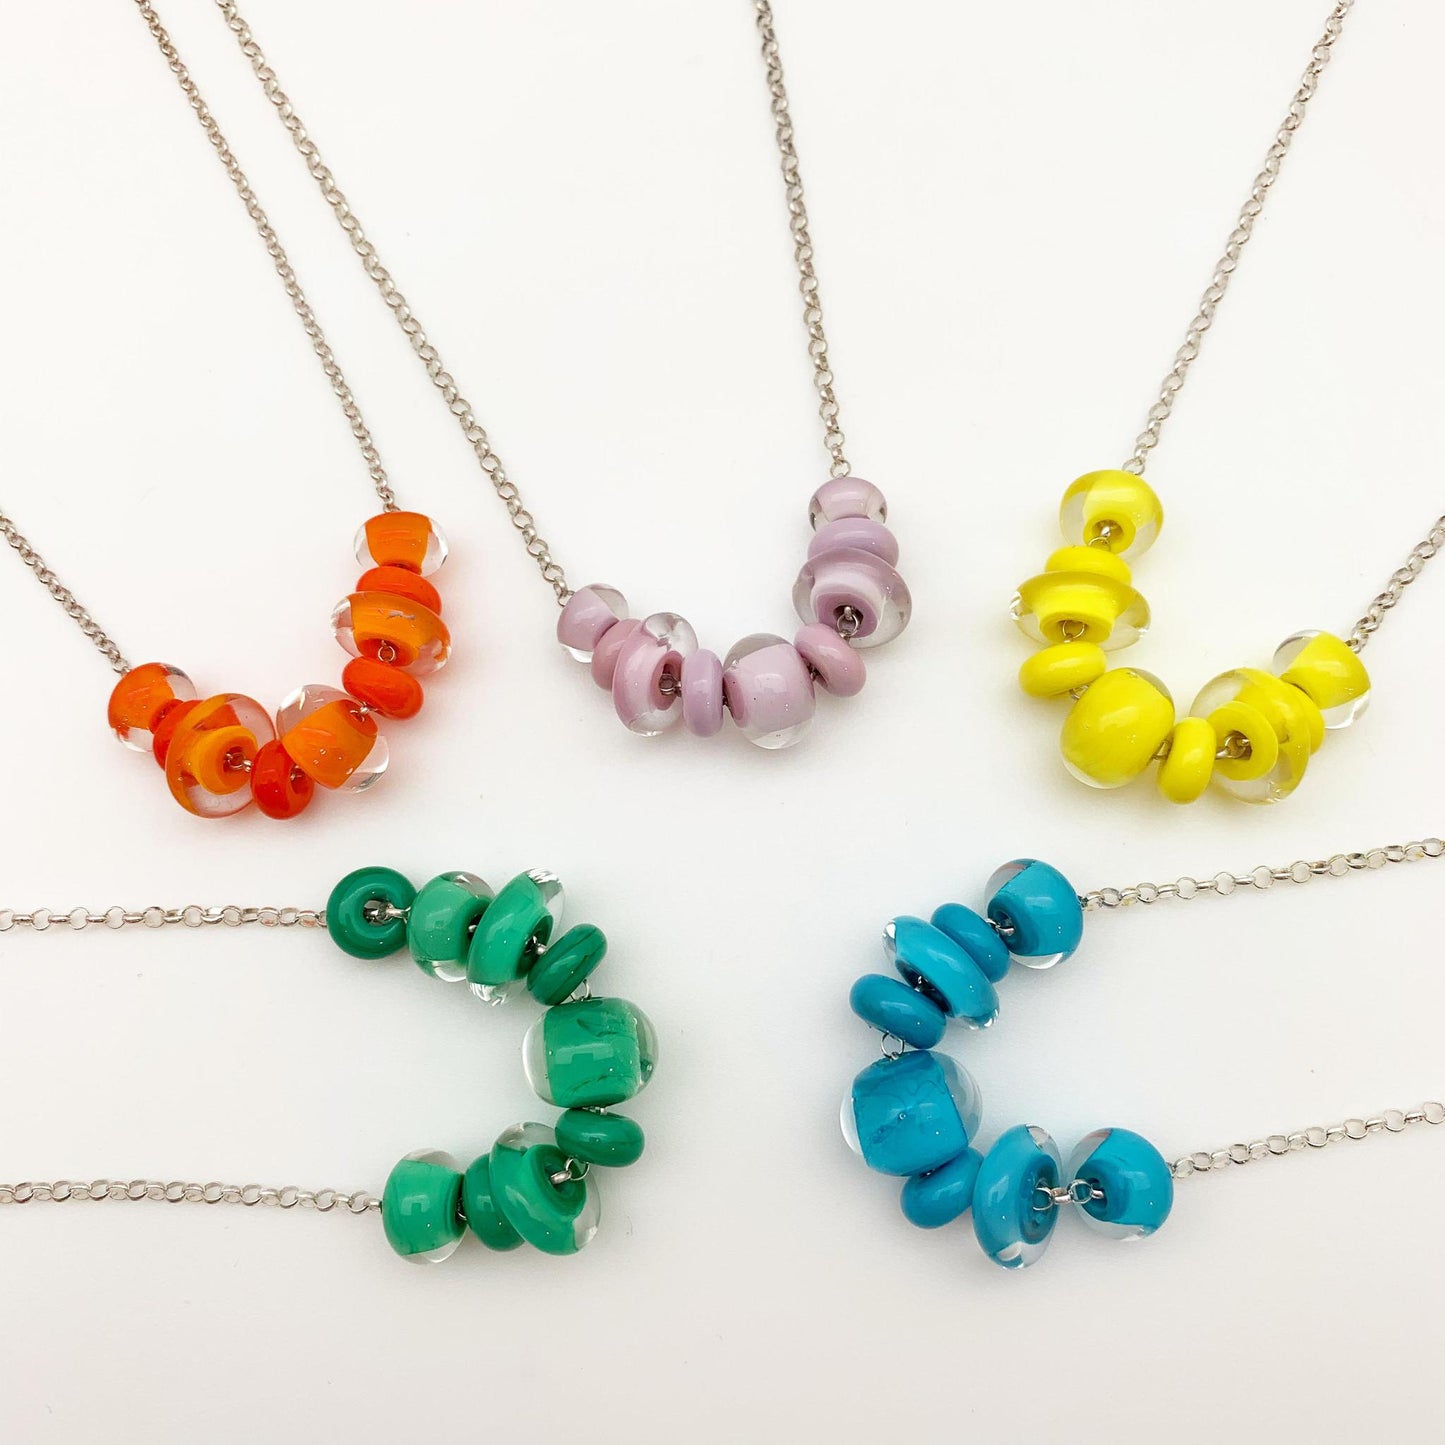 Necklace - Glass "Lifesaver" Beads - Black